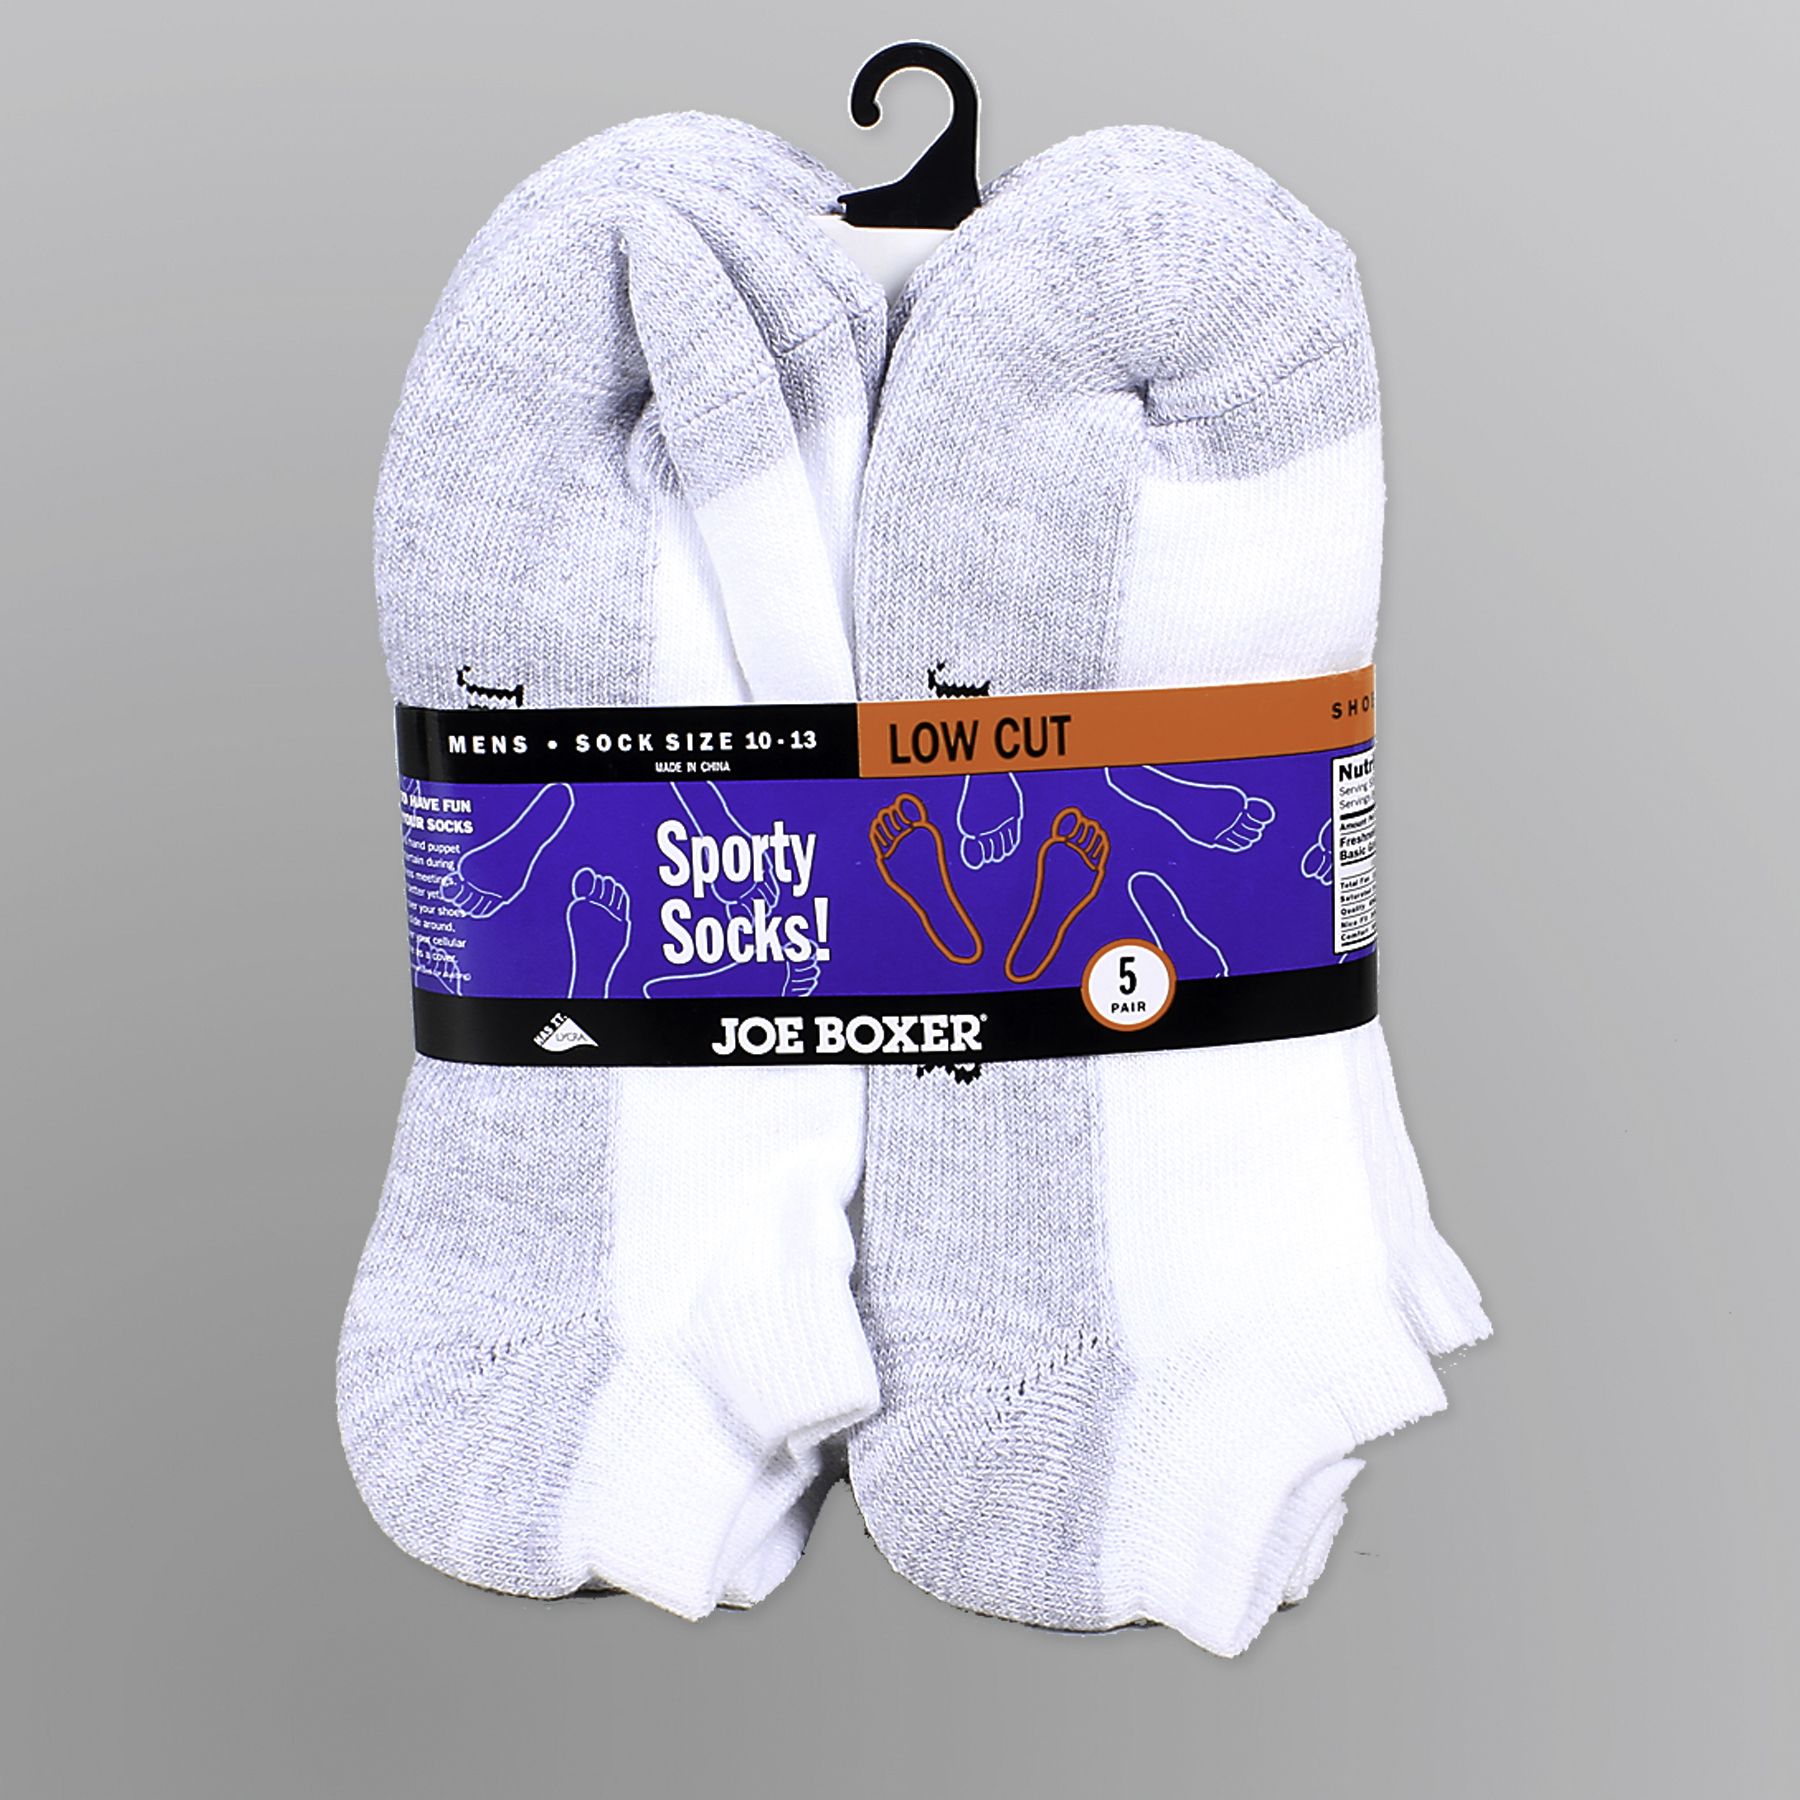 Joe Boxer Men's Low Cut Cushioned Socks - 5 Pairs Sizes 10-13